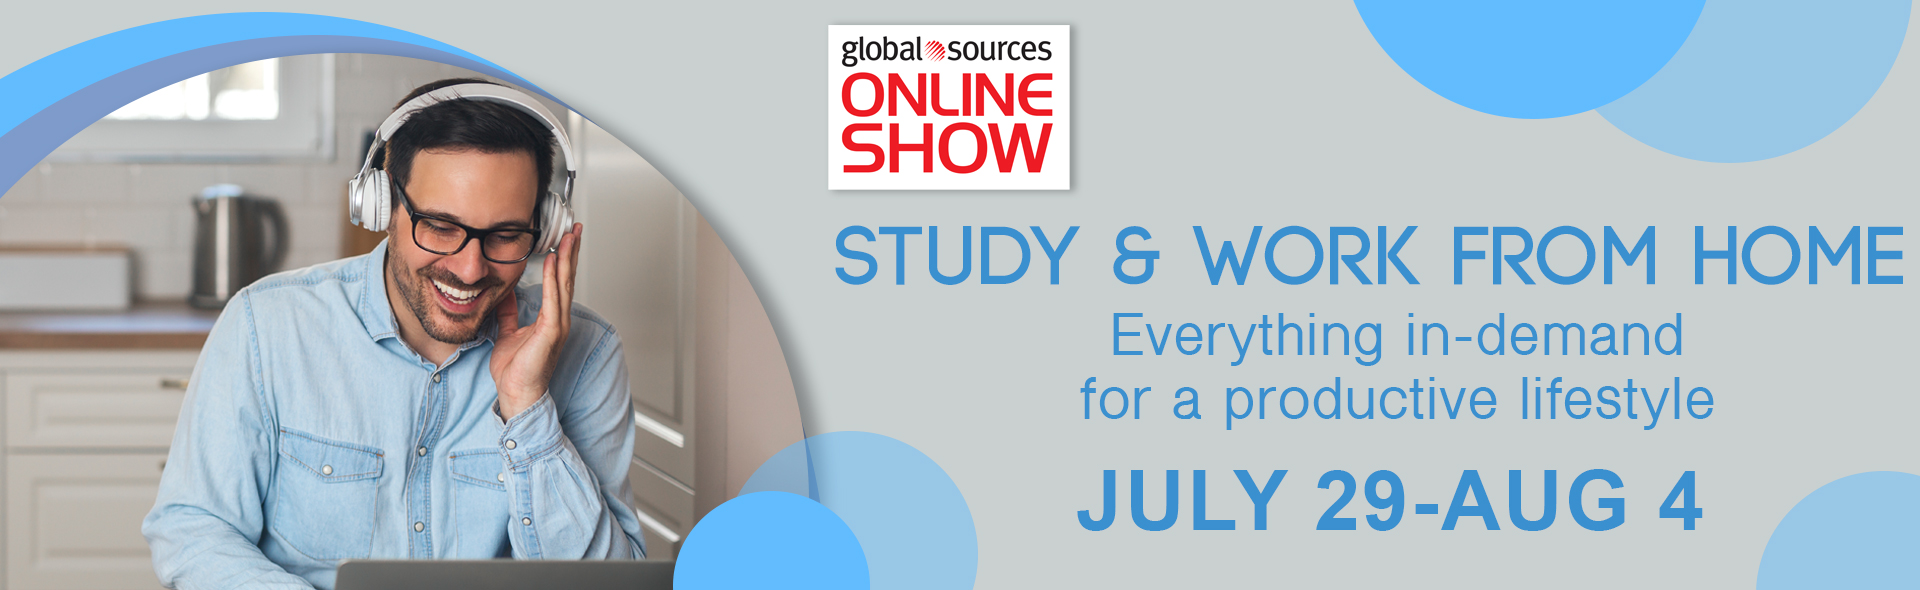 Global Sources Online Show - Study and Work from Home, Wong Chuk Hang, Hong Kong, Hong Kong